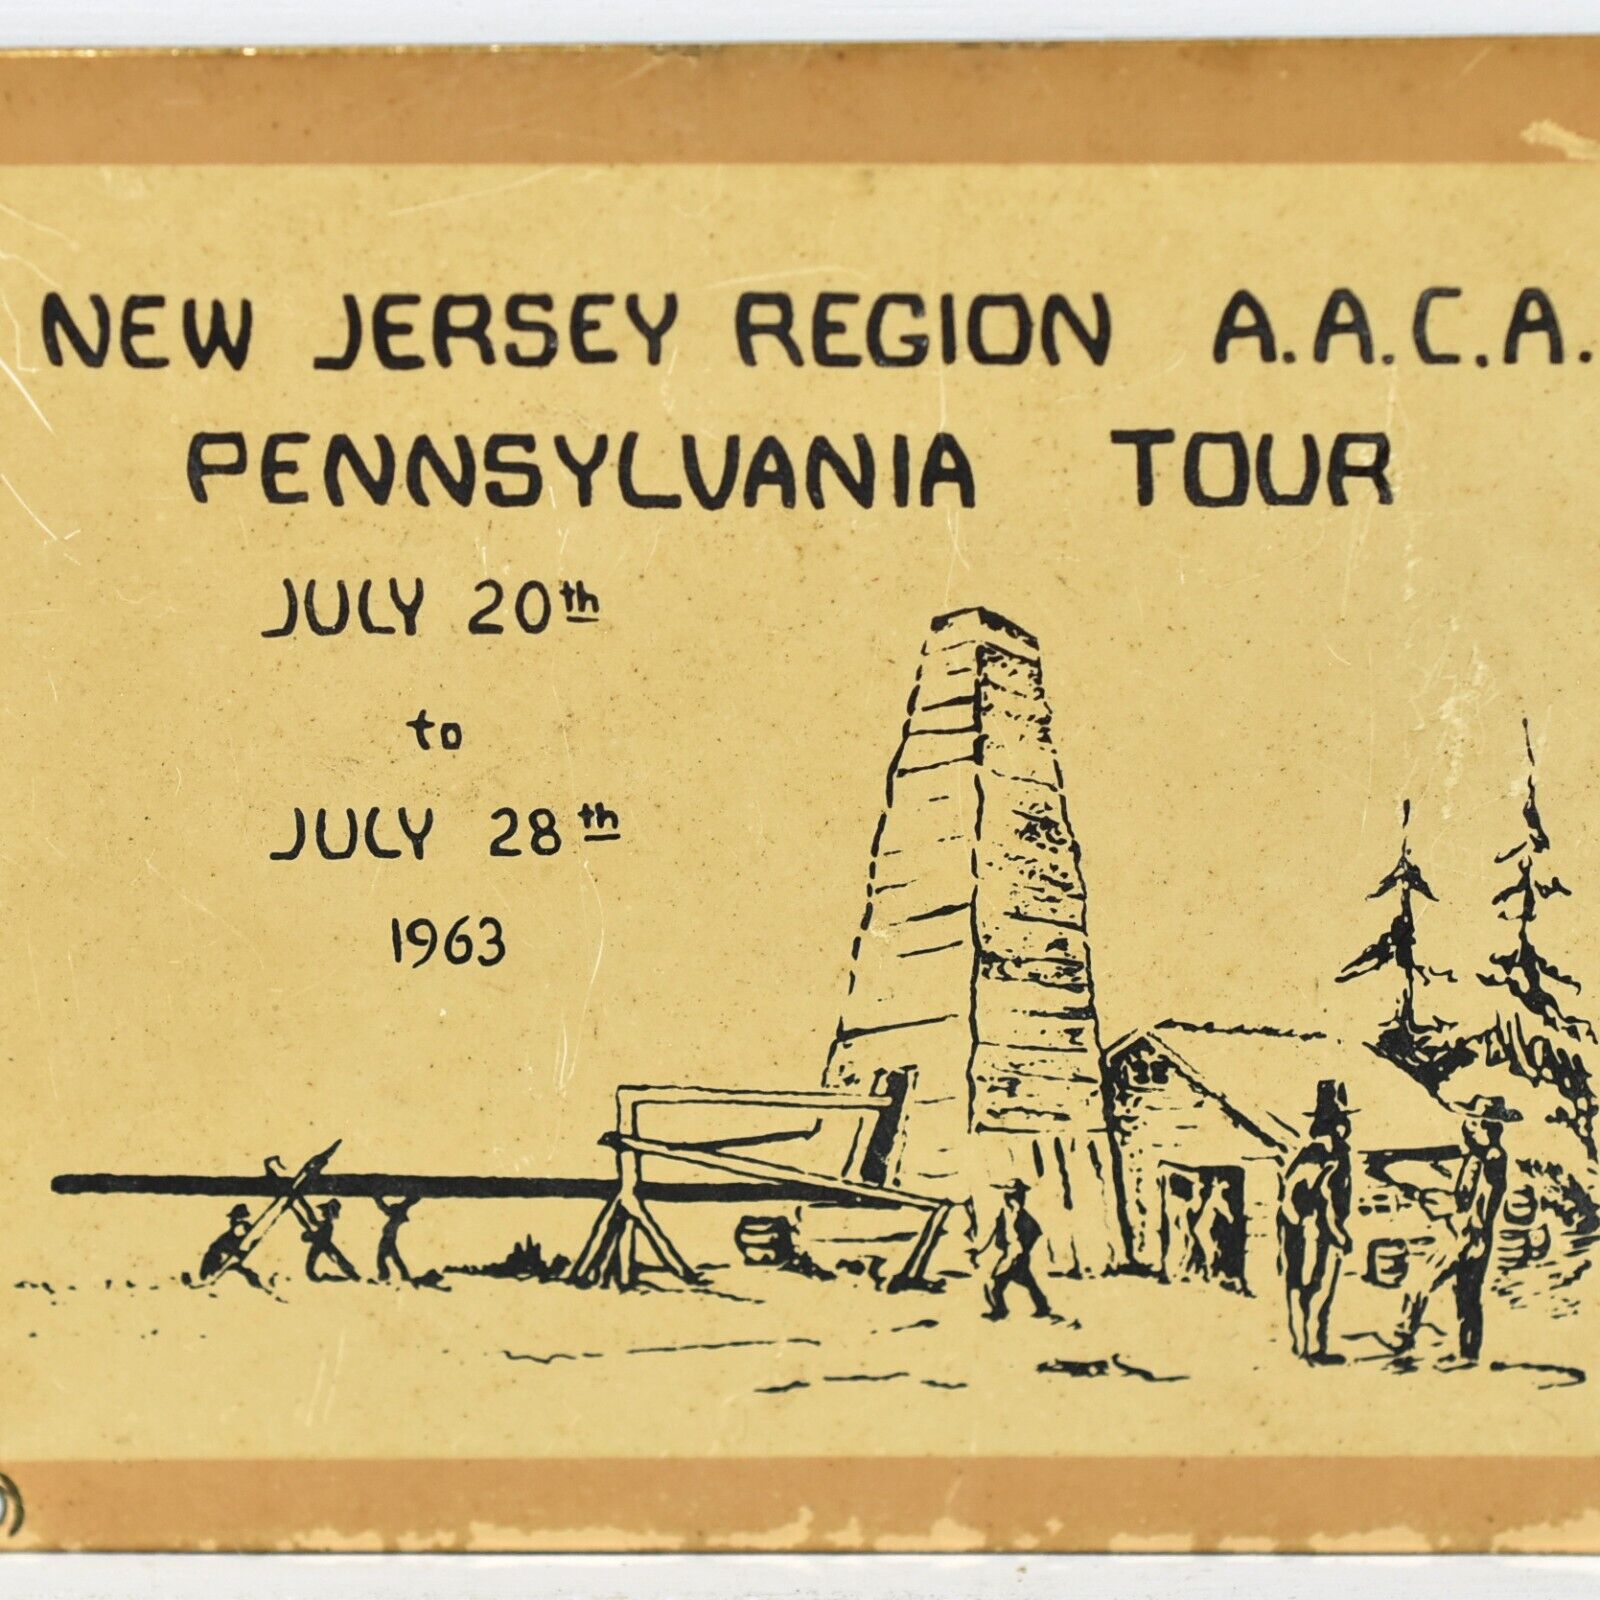 1963 Pennsylvania Tour AACA Antique Car Automobile Club Show New Jersey Region